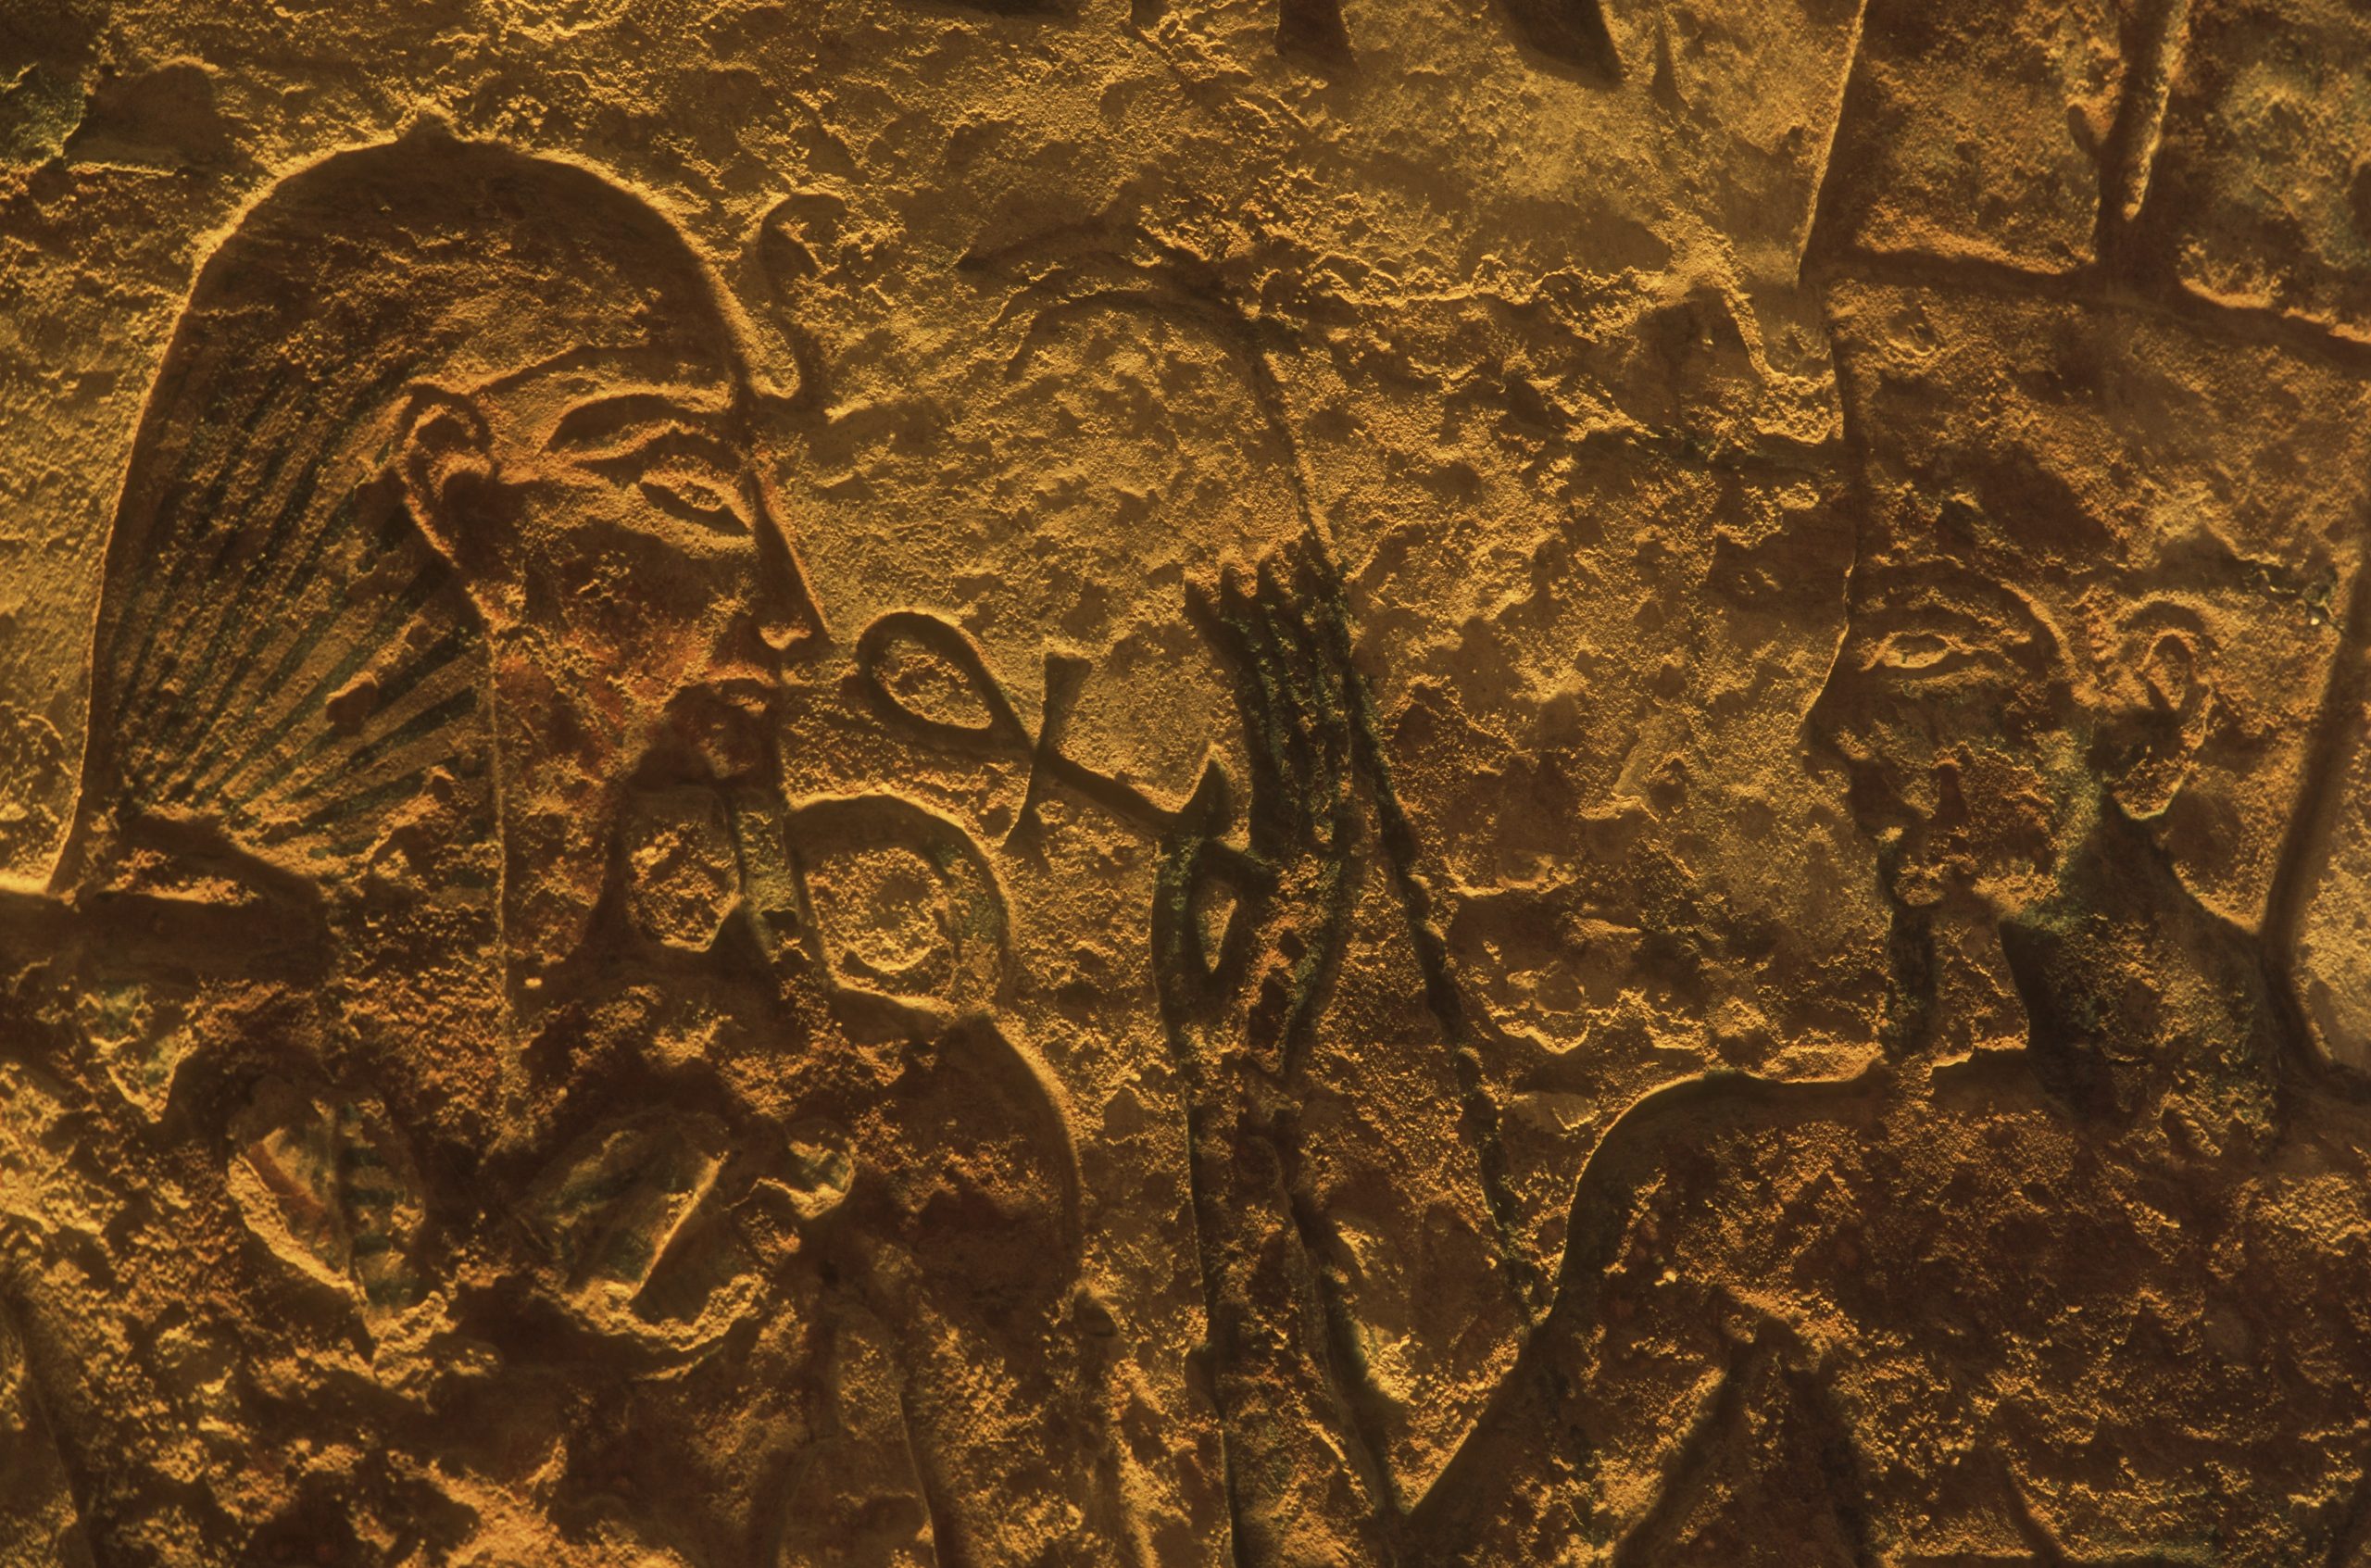 A photograph of ancient Egyptian symbols. Depositphotos.